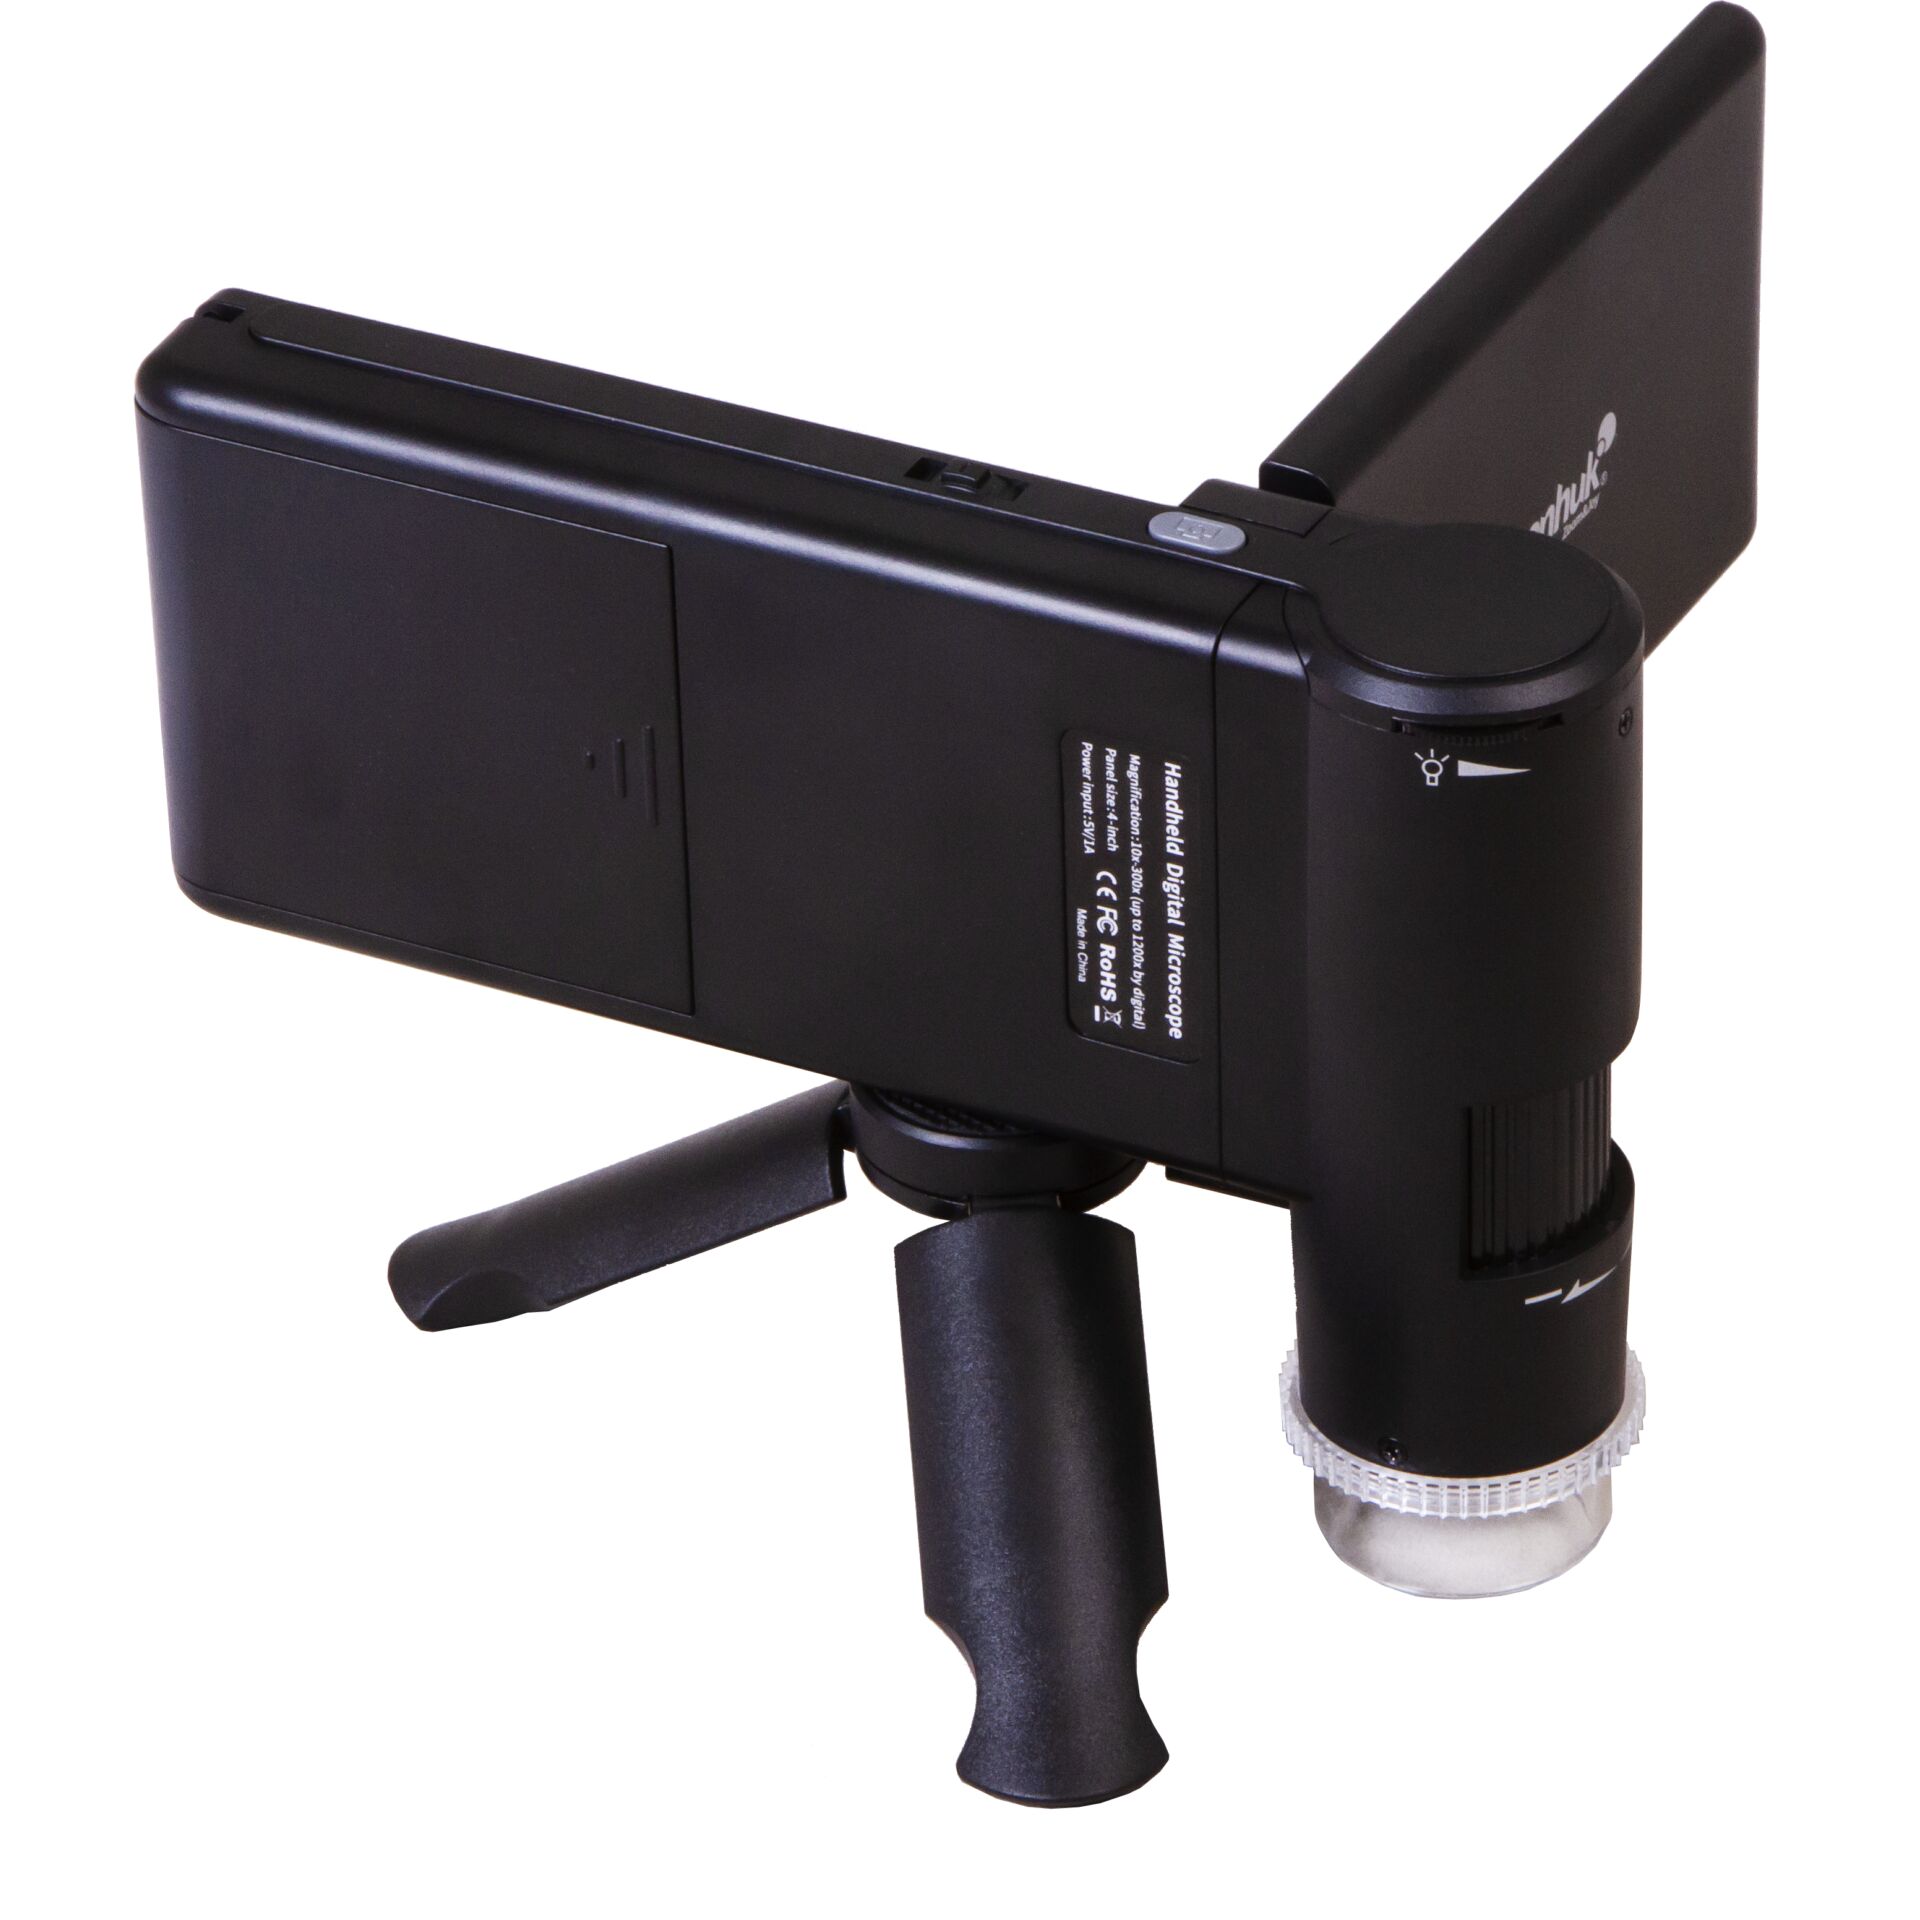 Levenhuk DTX 700 Mobi 1200x Digitales Mikroskop